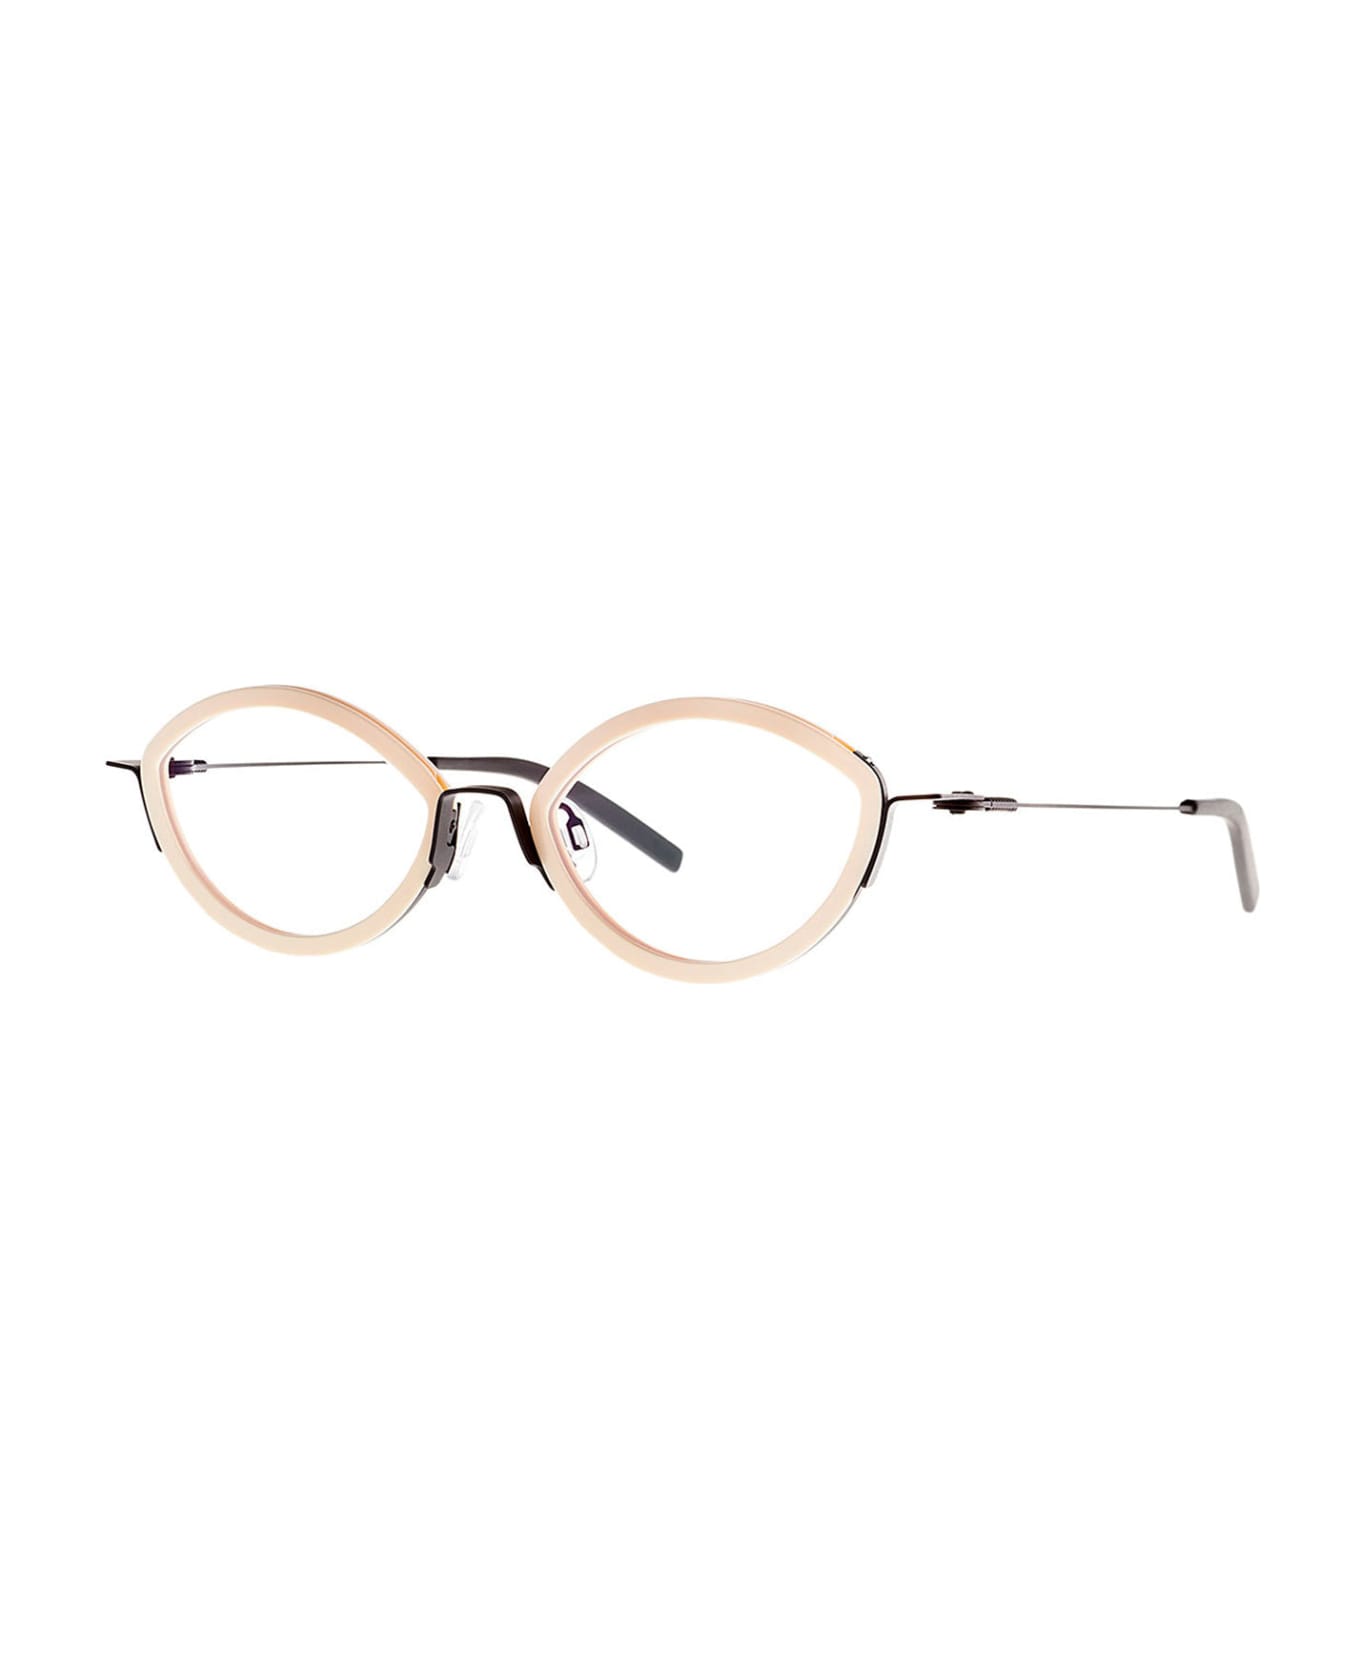 Theo Eyewear Trinxat 41 Glasses - cream/black